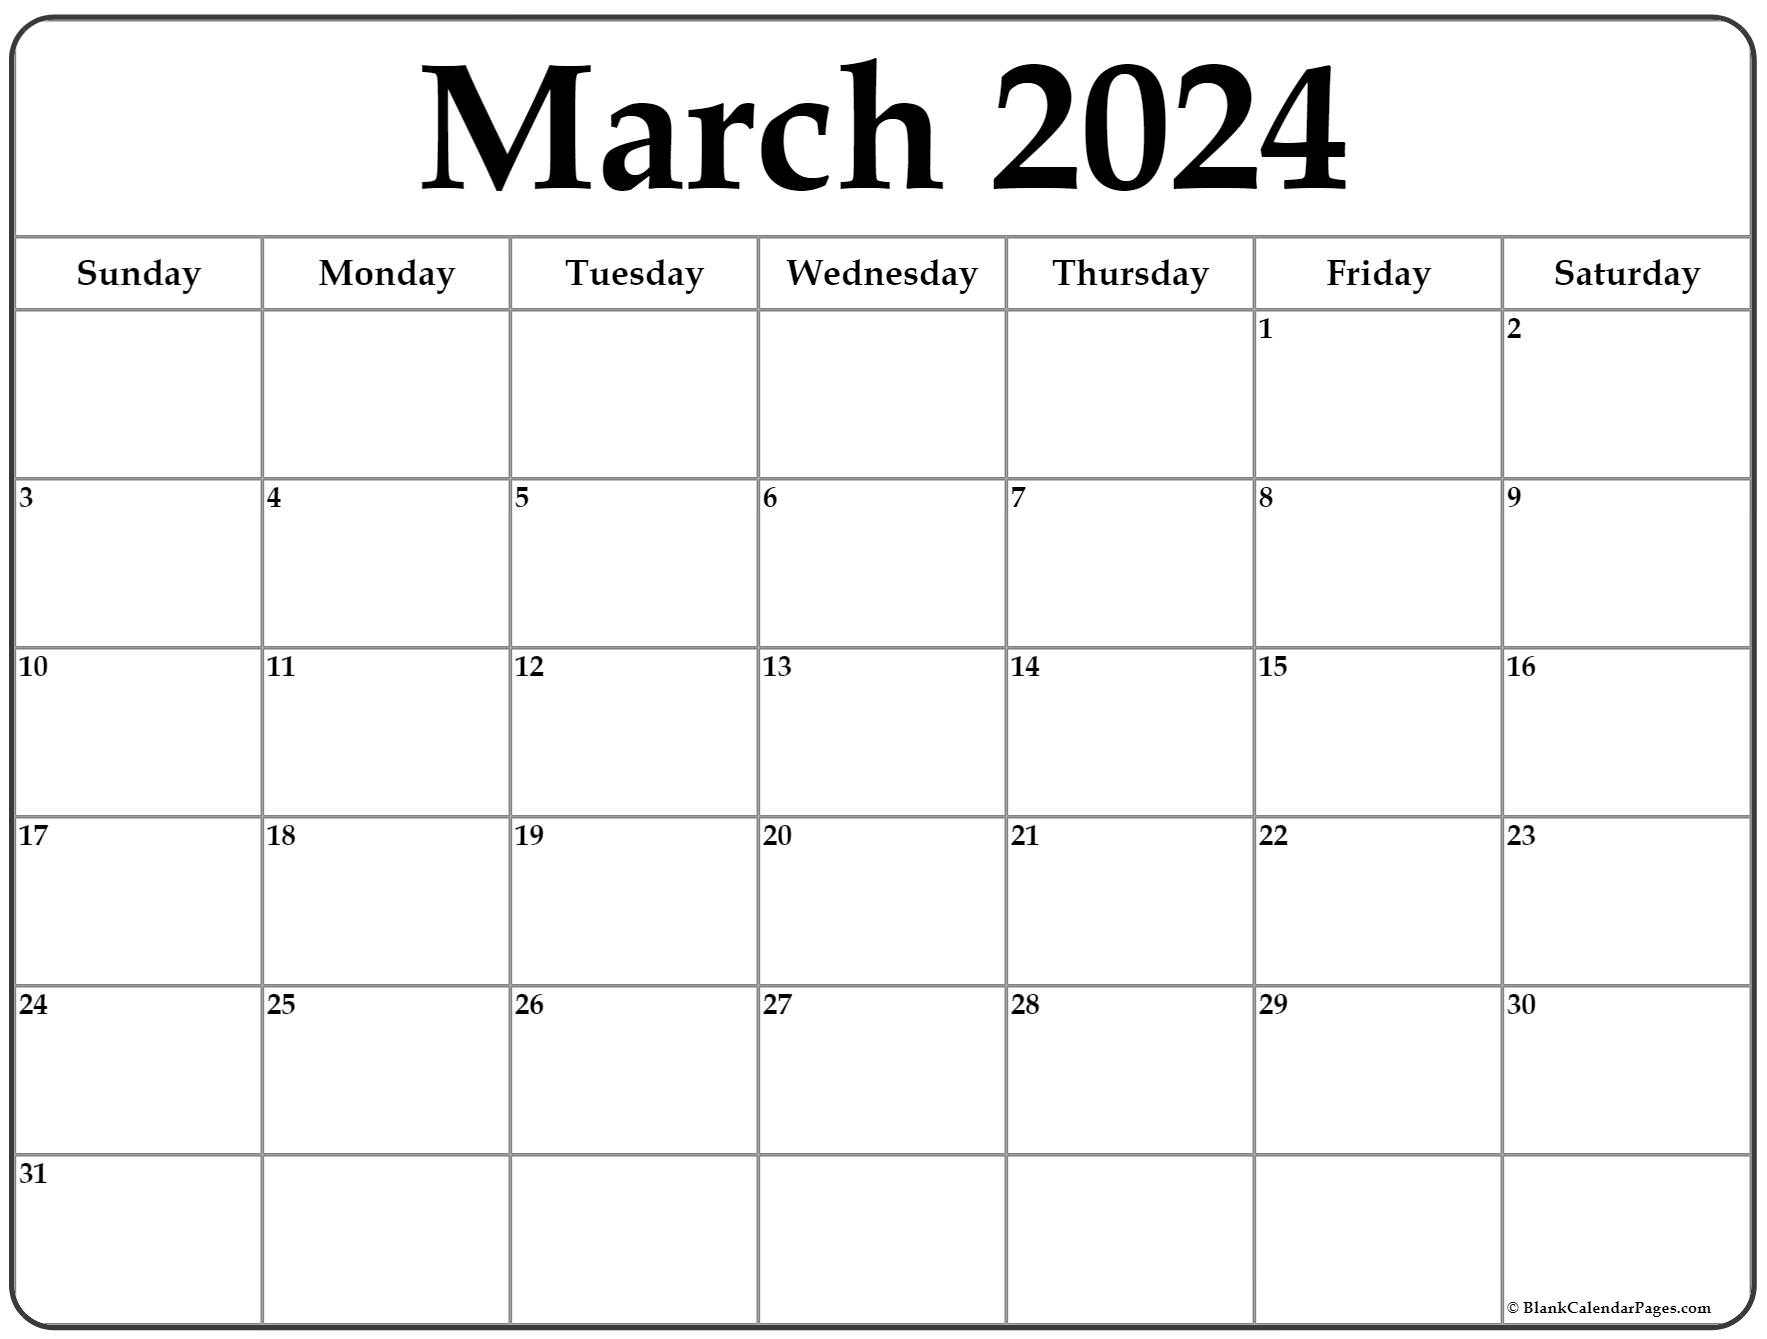 Free March 2022 Printable Calendar March 2022 Calendar | Free Printable Calendar Templates